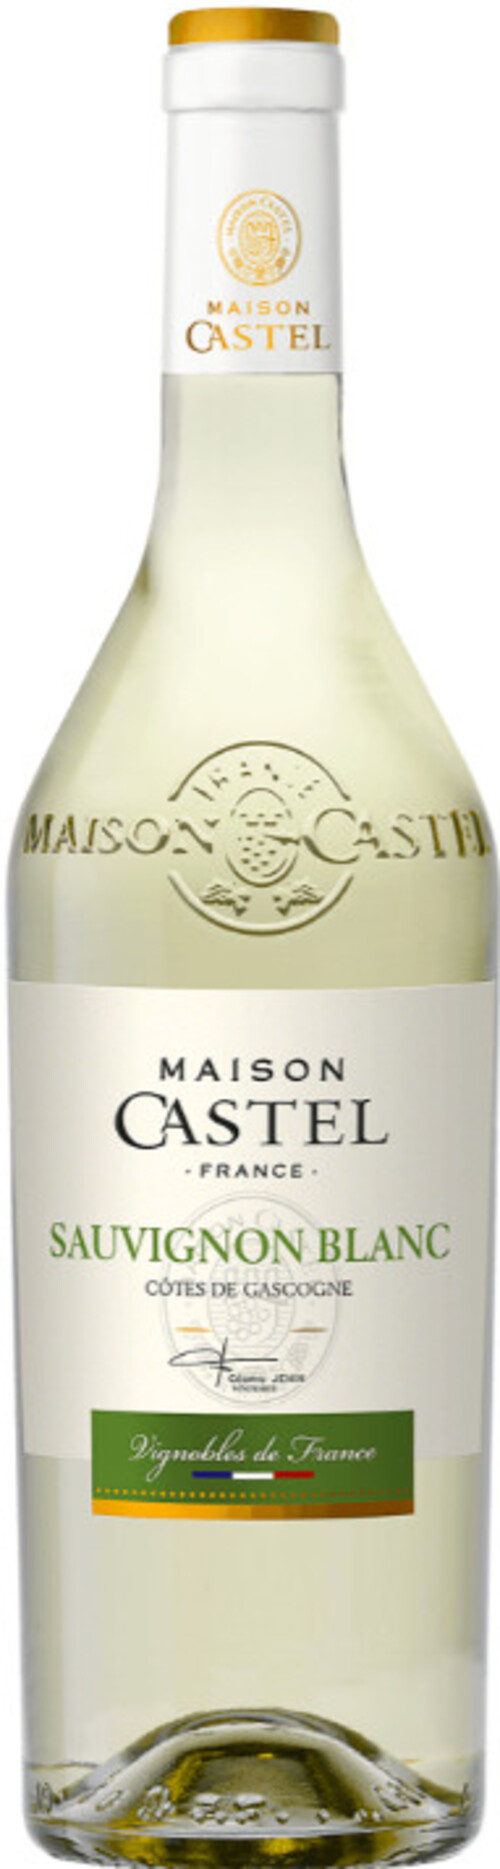 Rượu vang trắng Pháp Maison Castel Sauvignon blanc